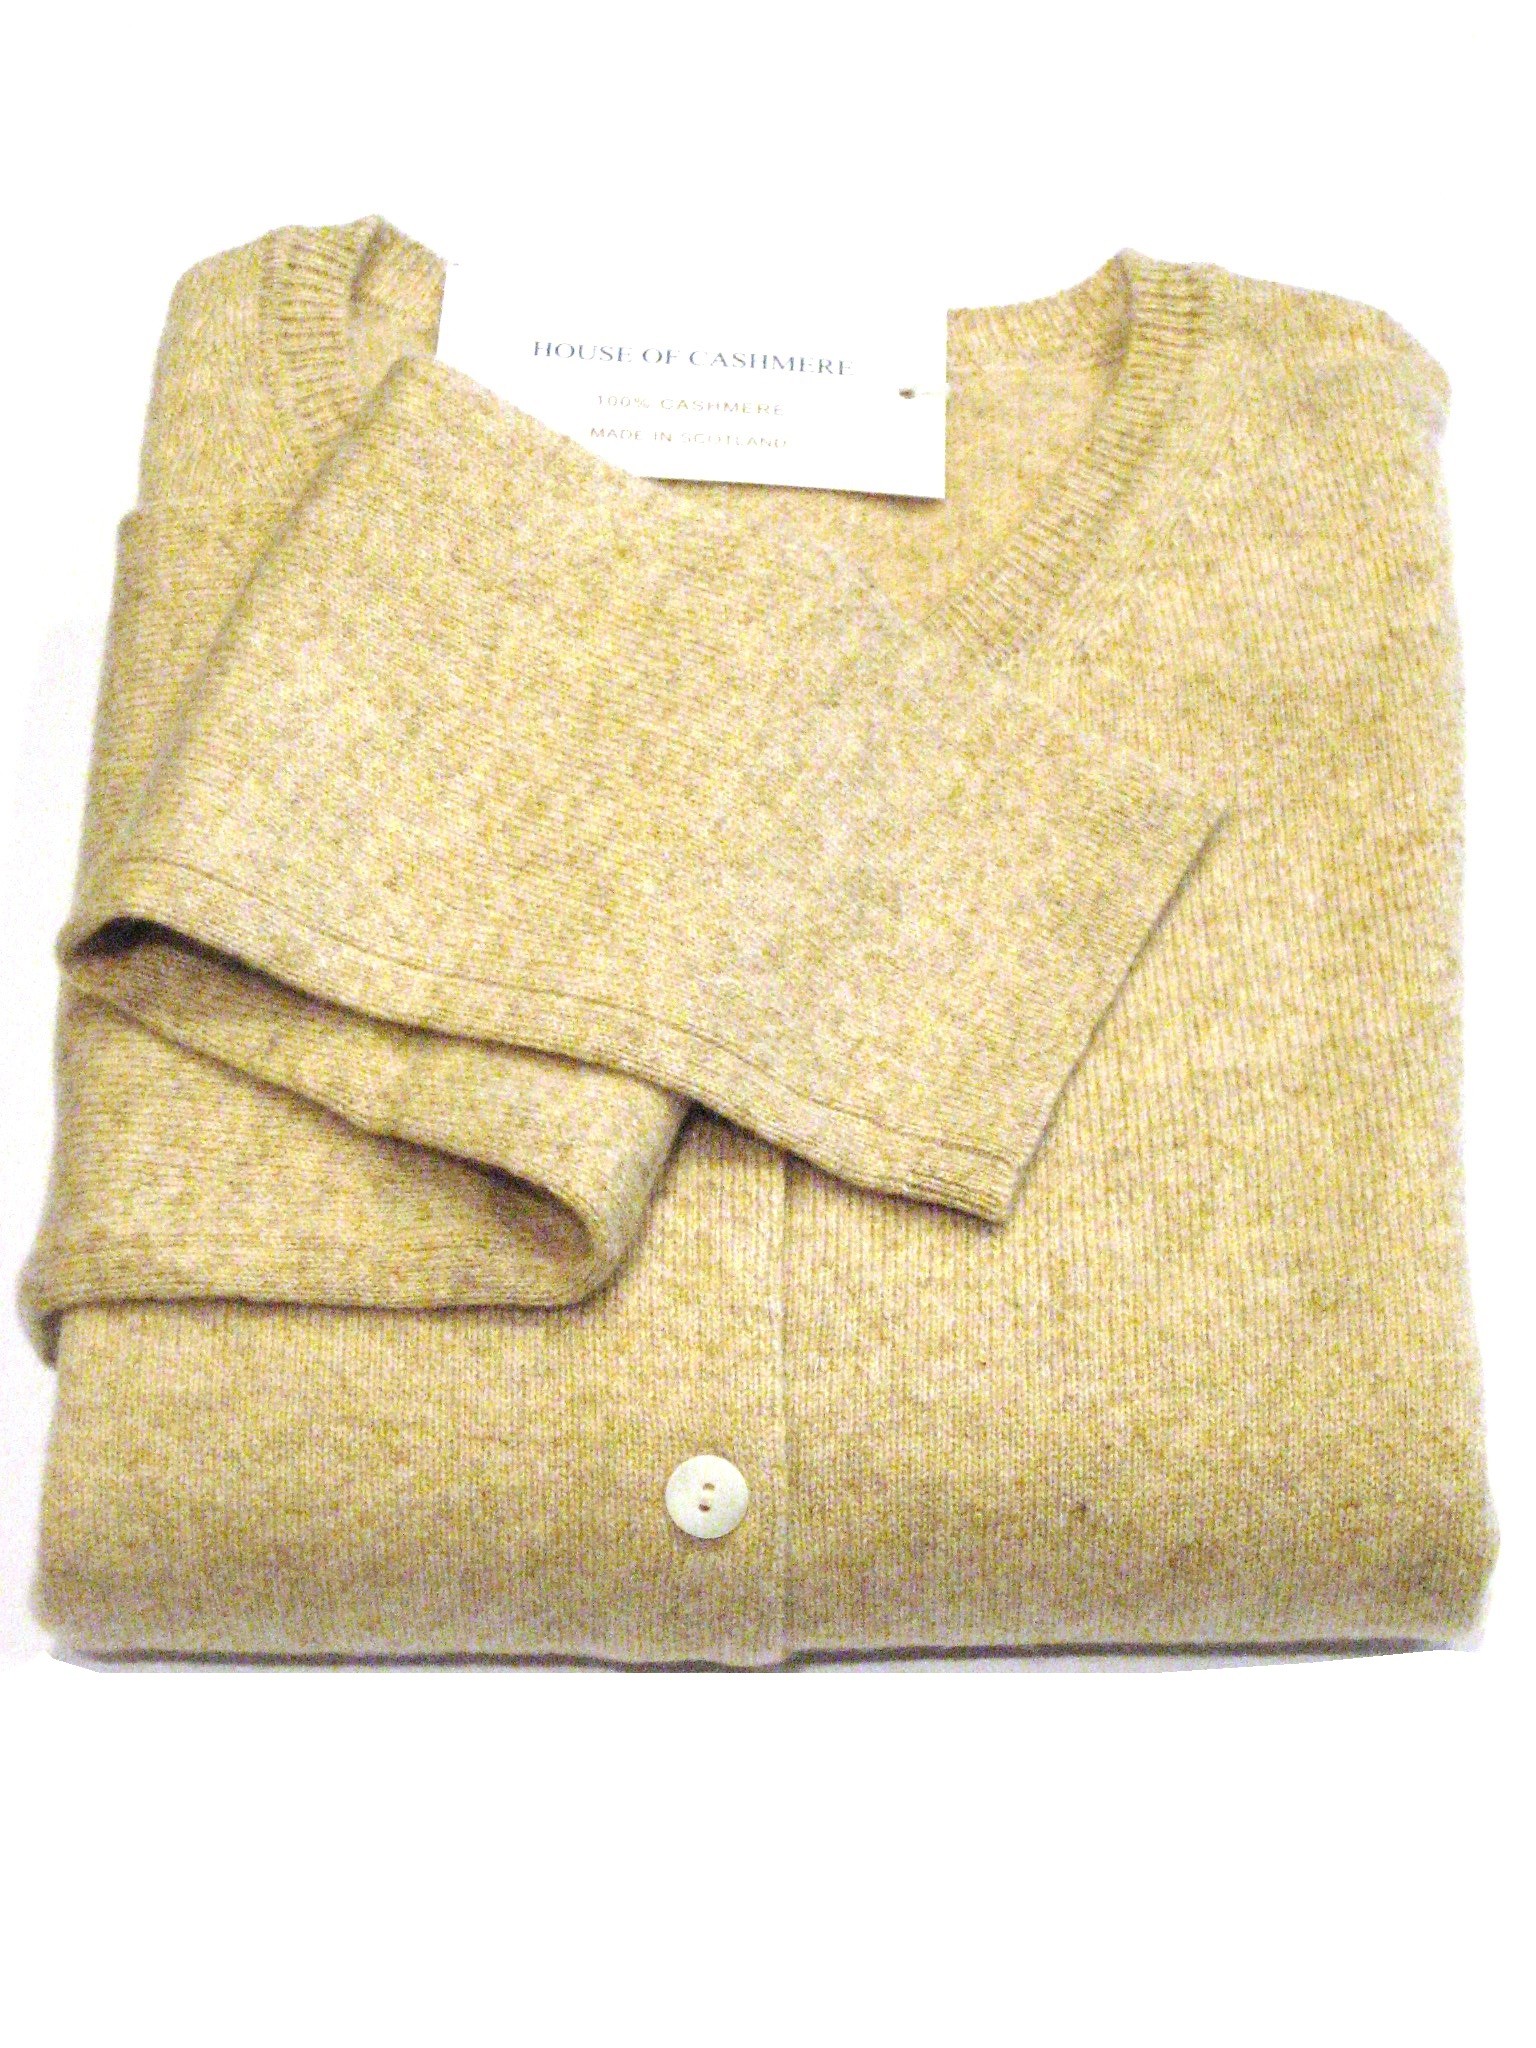 Linen Ladies' Crew Cardigan - 100% Cashmere Made in Scotland